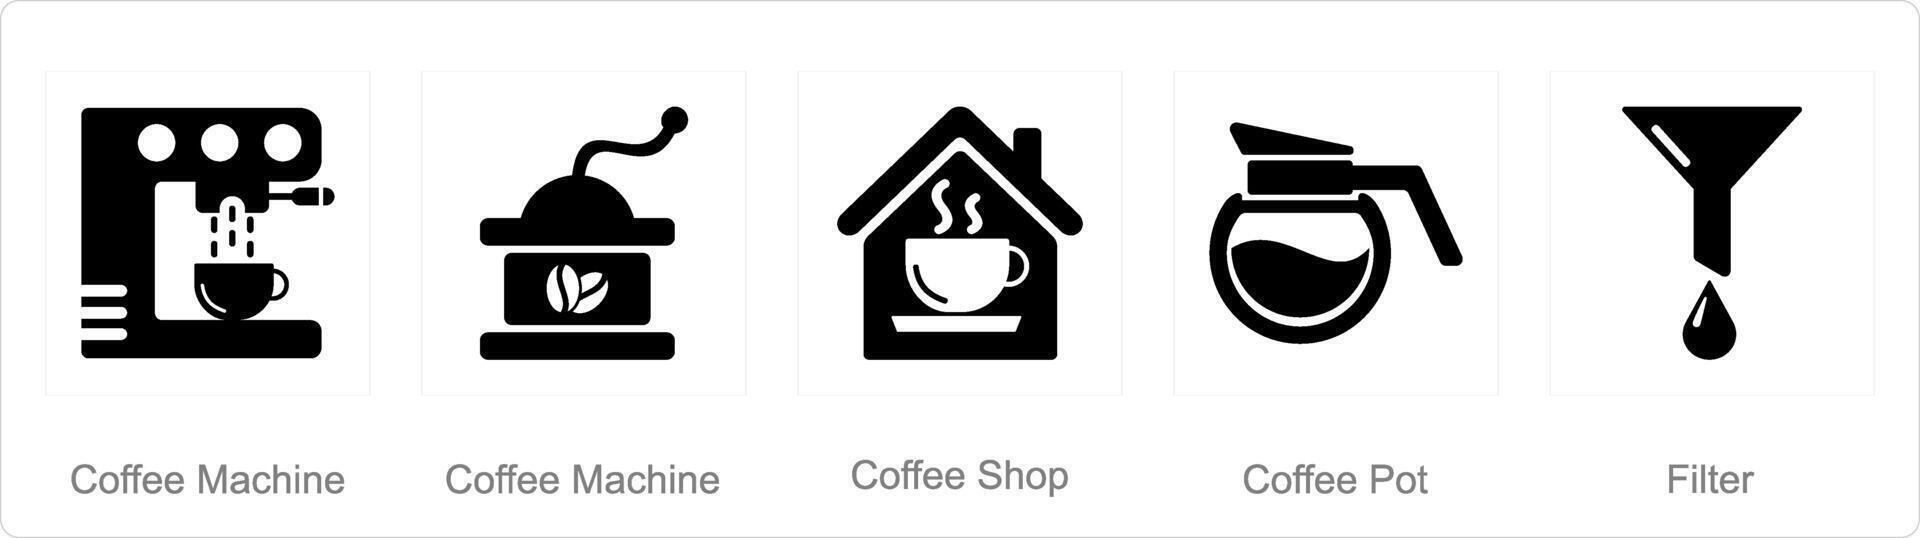 A set of 5 Coffee icons as coffee machine, coffee shop, coffee pot vector